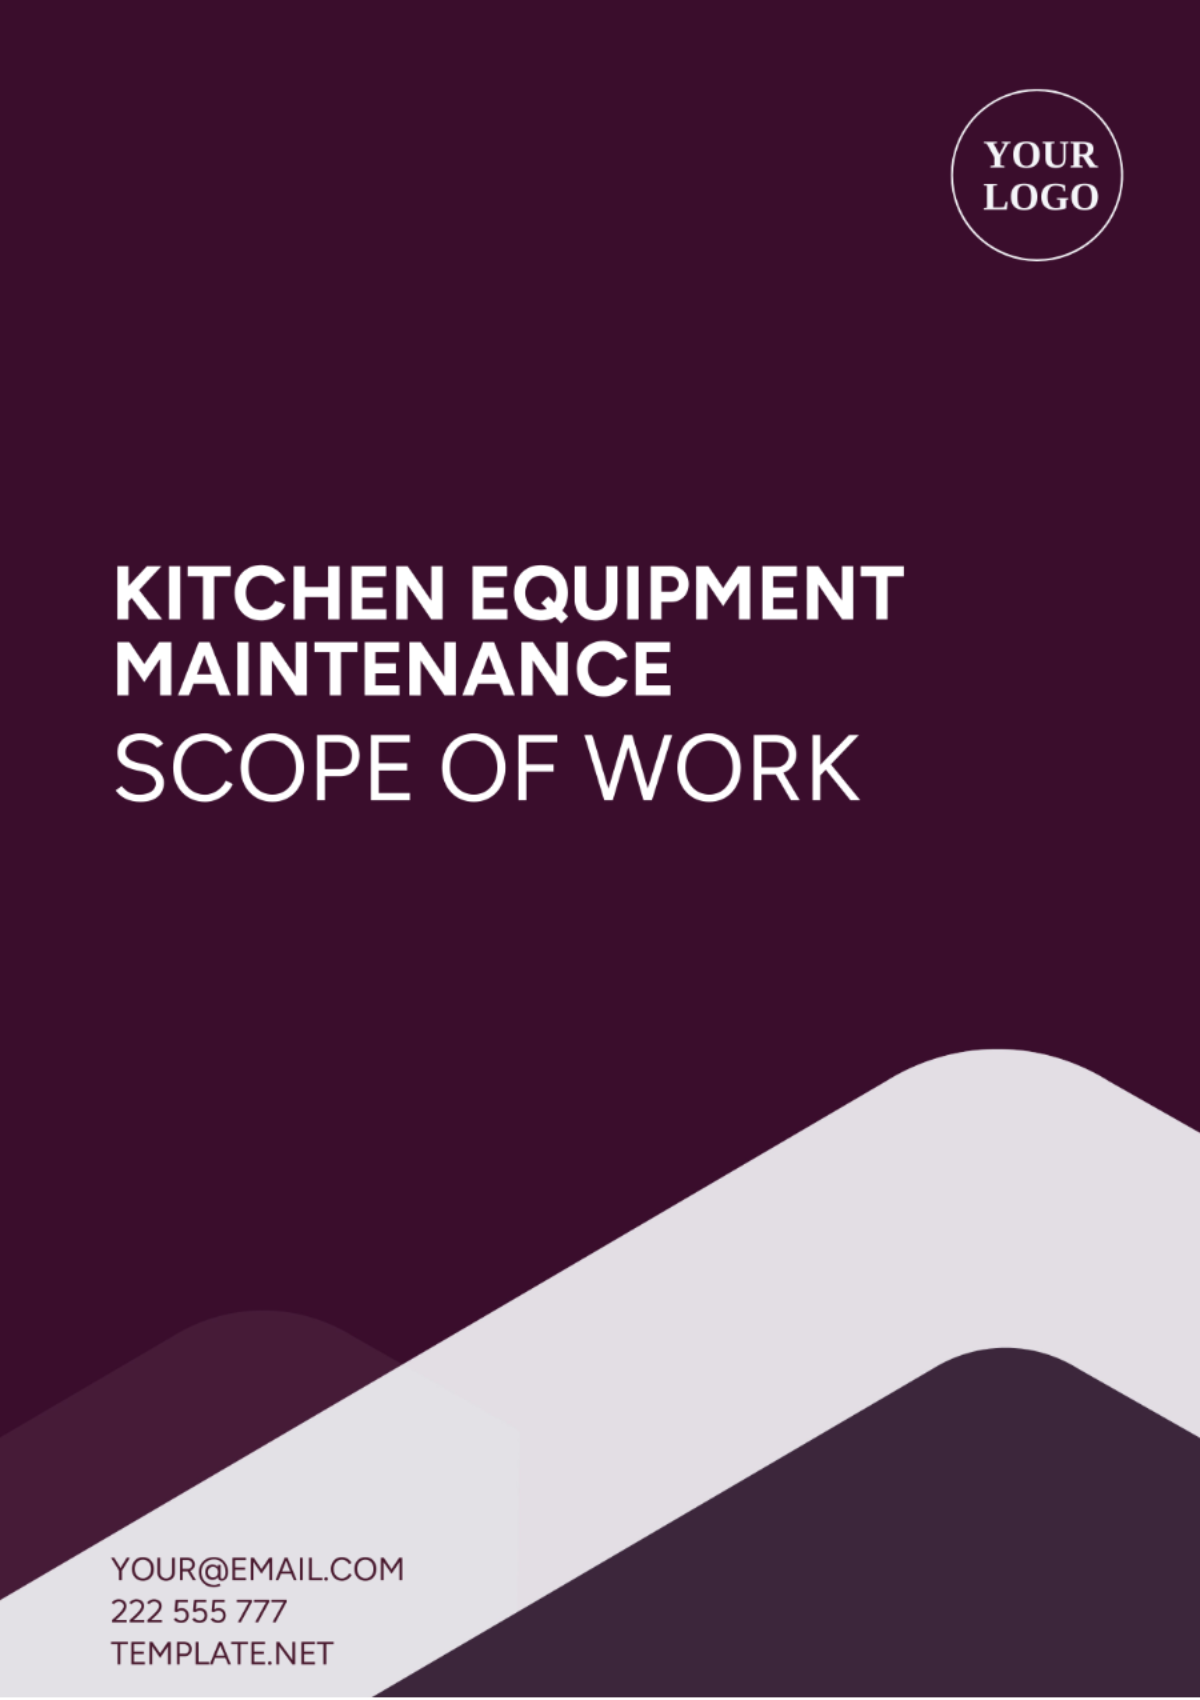 Free Kitchen Equipment Maintenance Scope of Work Template